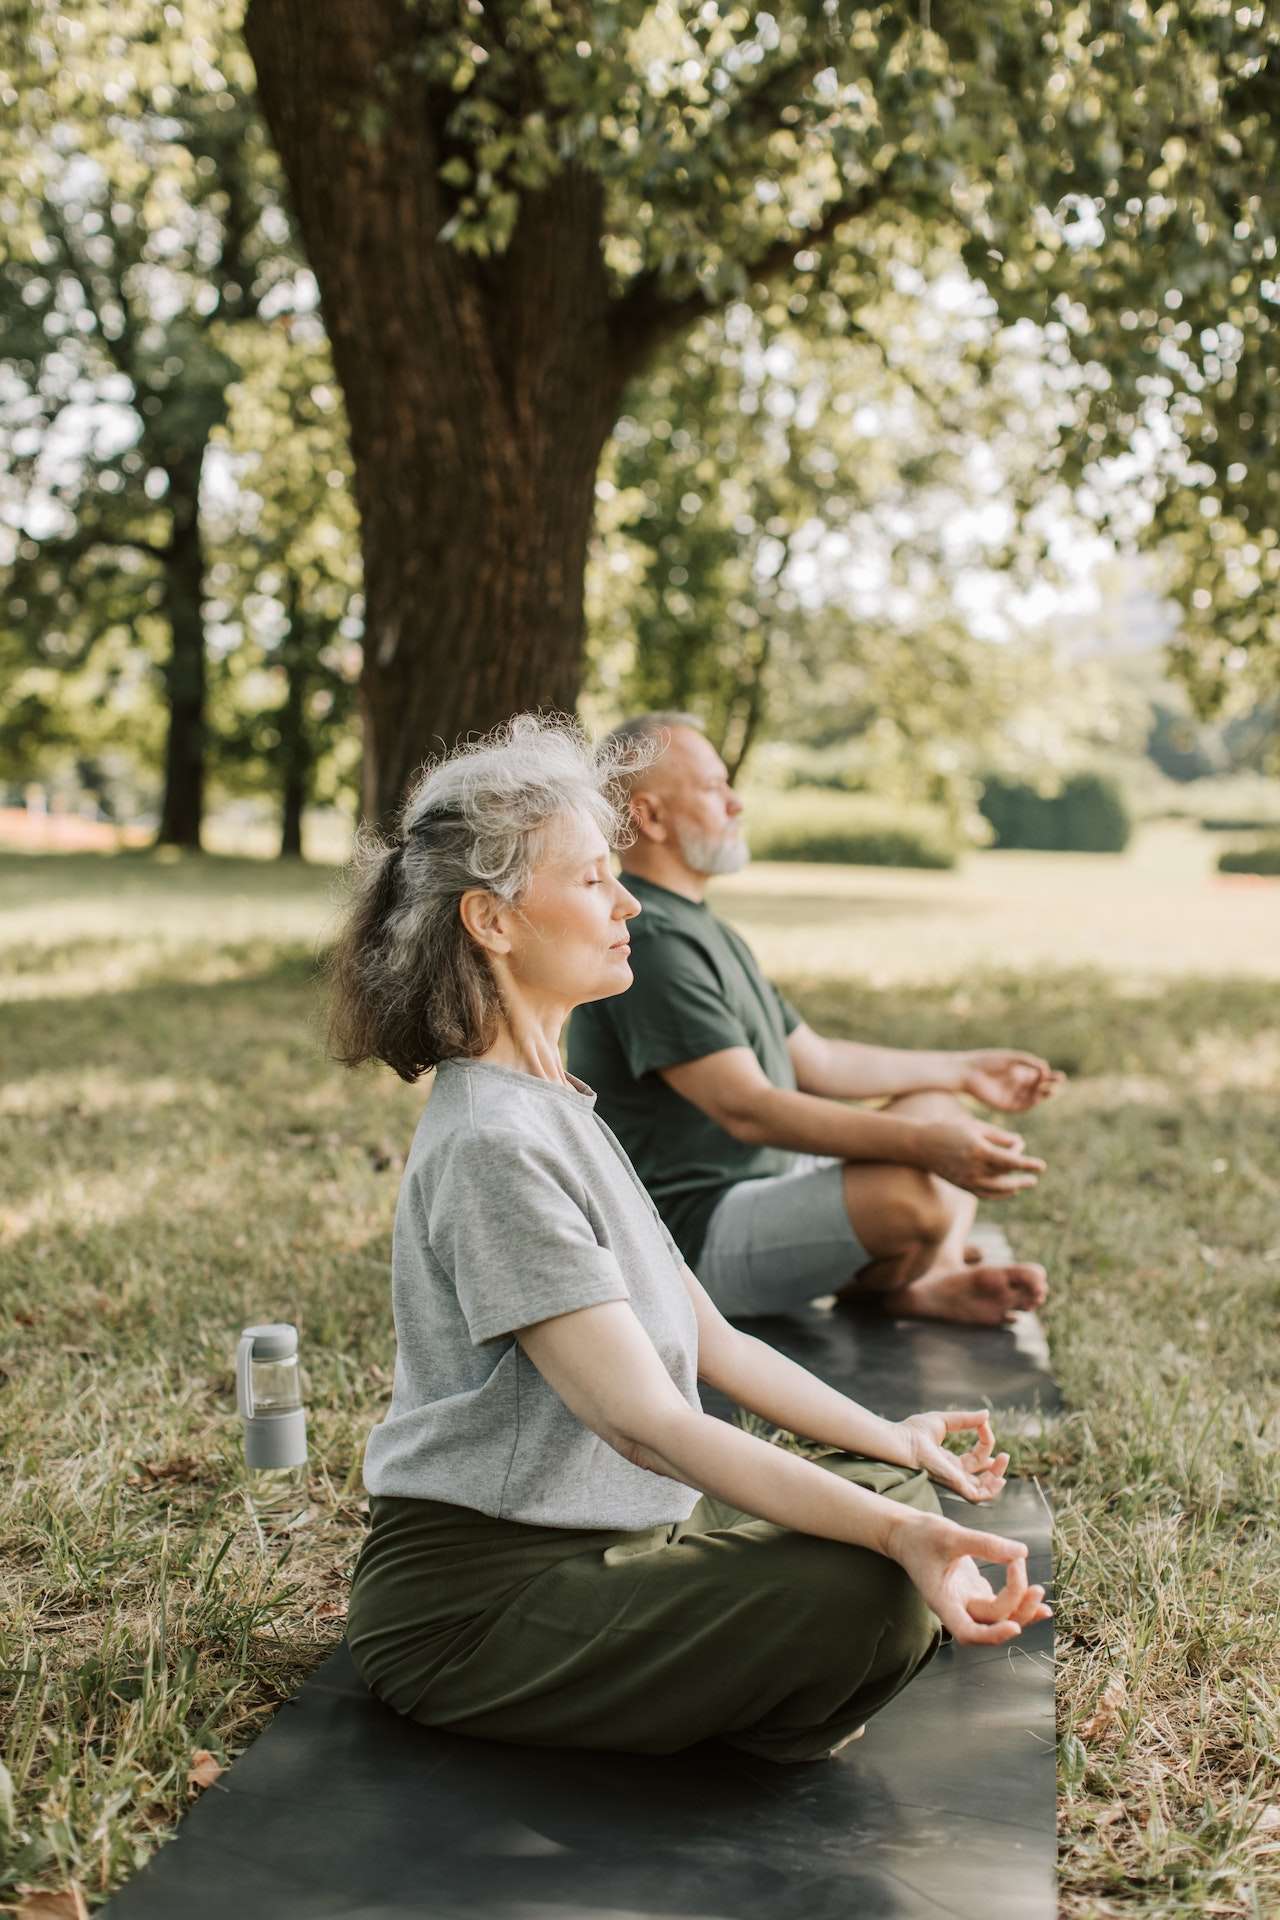 Elderly People Meditating in the Park 